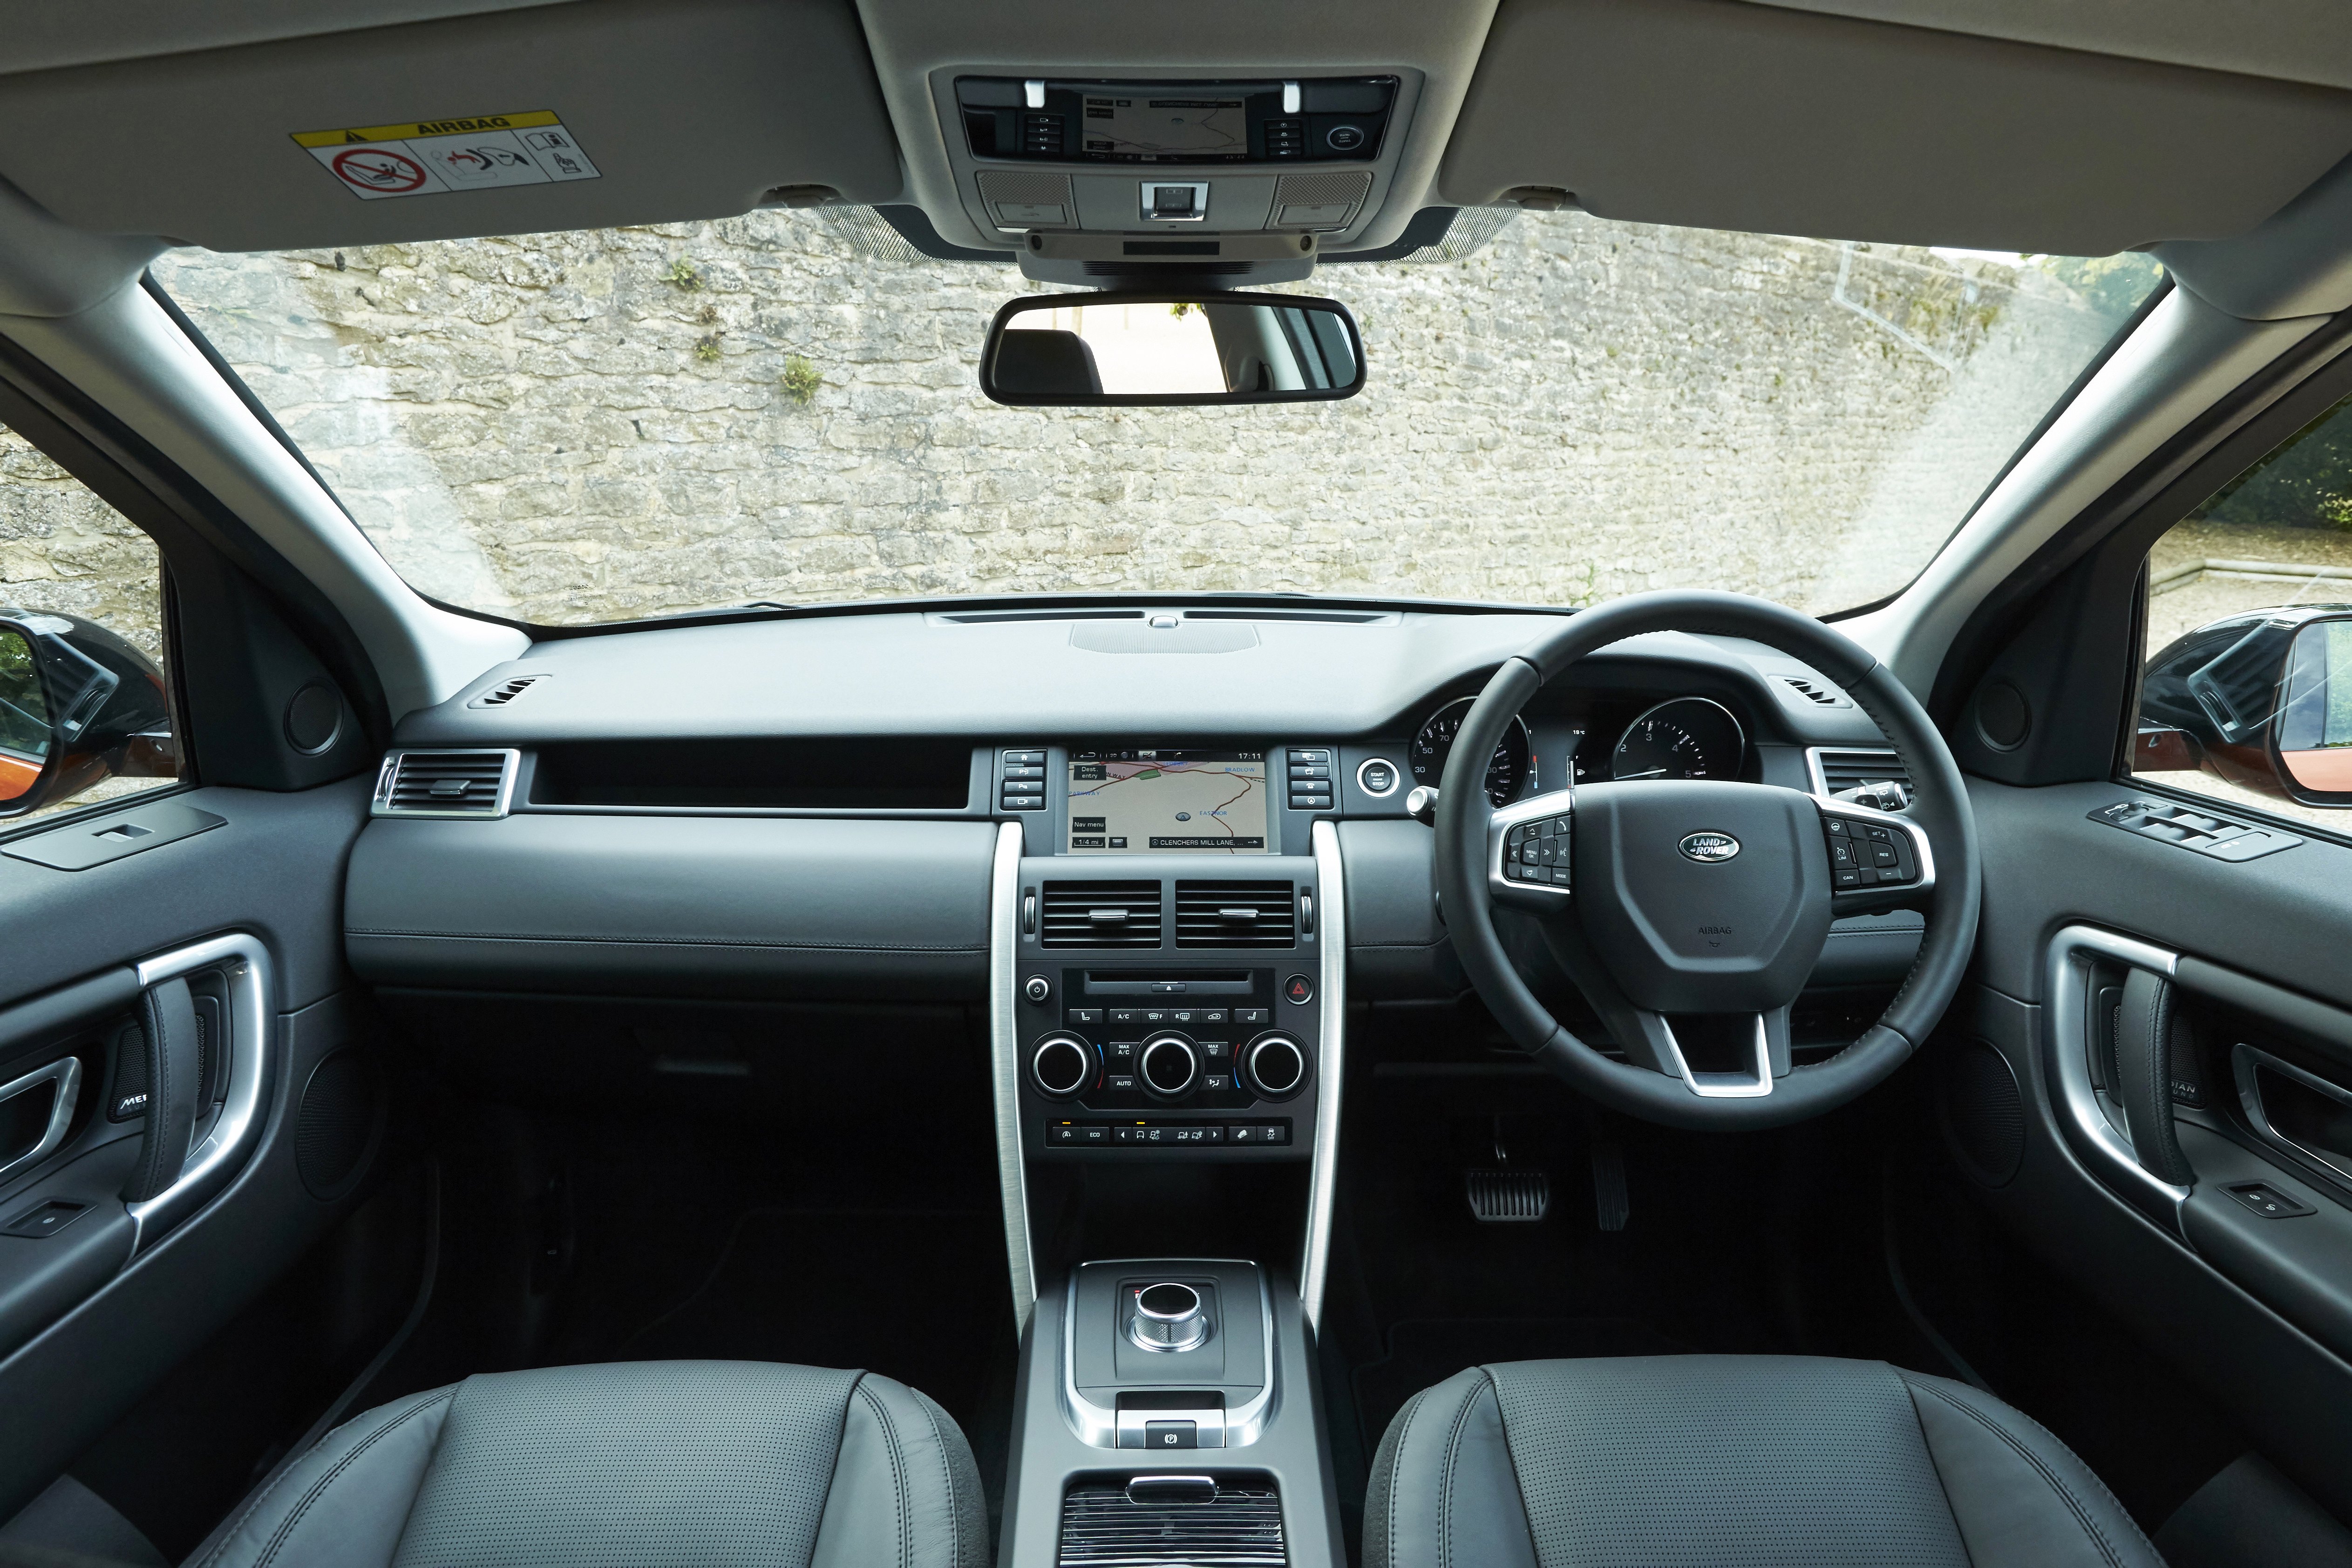 gids Verbinding verbroken mixer Land Rover Discovery Sport (2015-2019) Interior & Infotainment | carwow